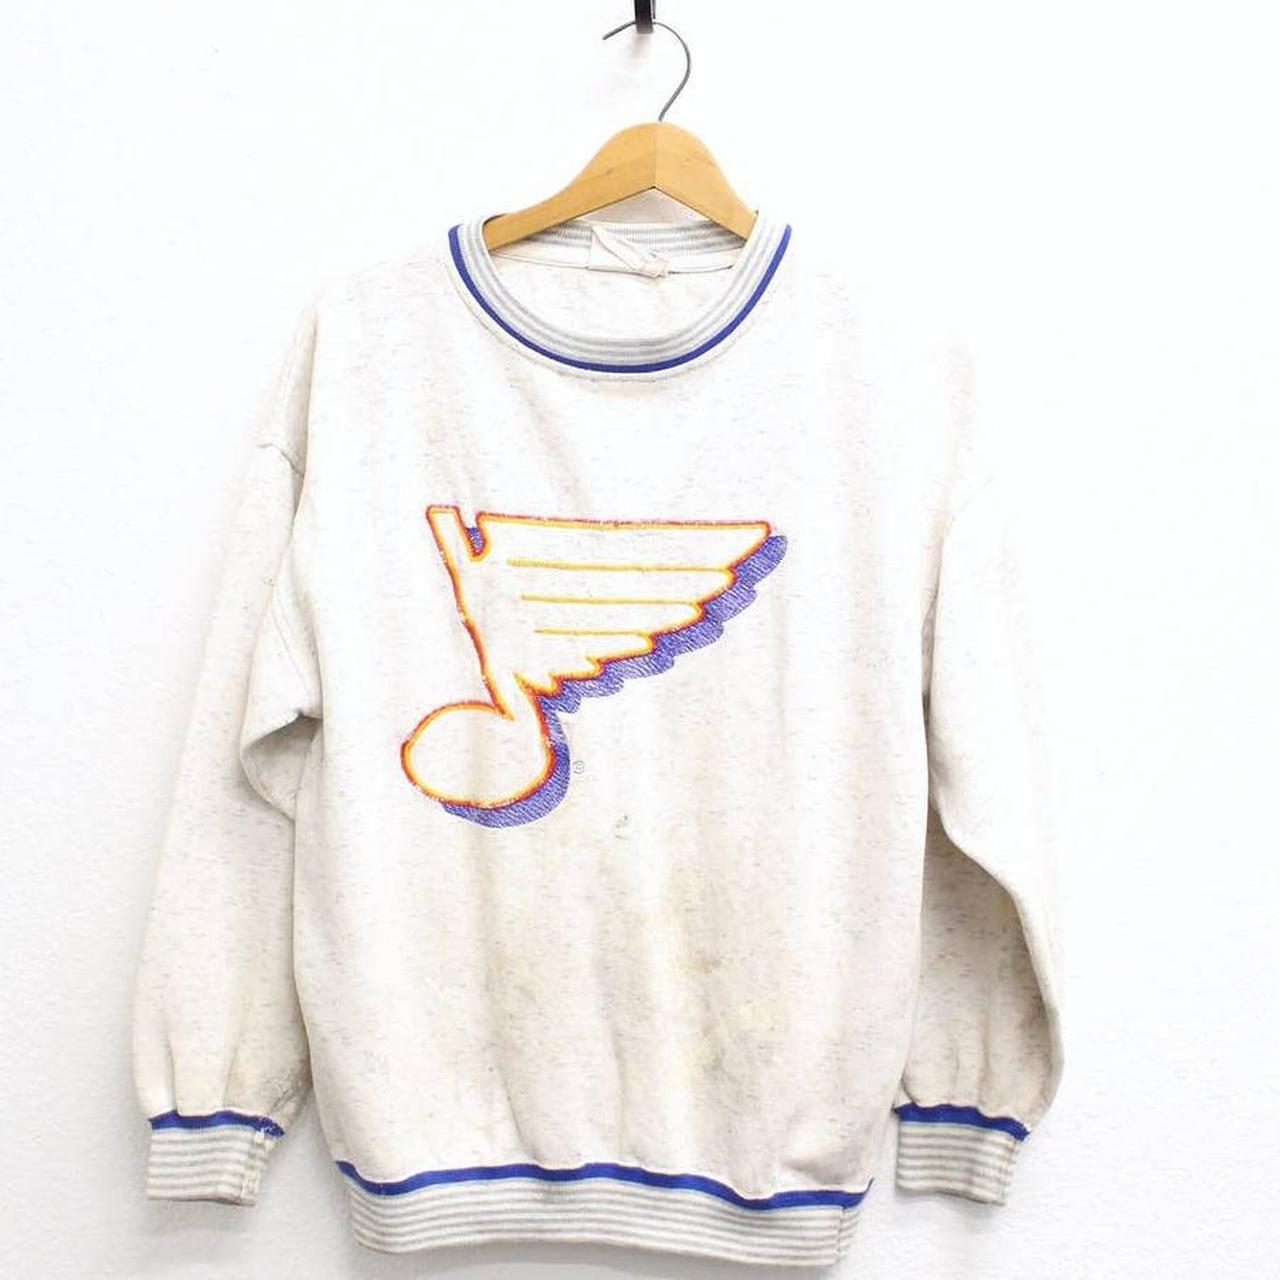 Vintage St. Louis Blues Hockey Crew-Neck Sweatshirt